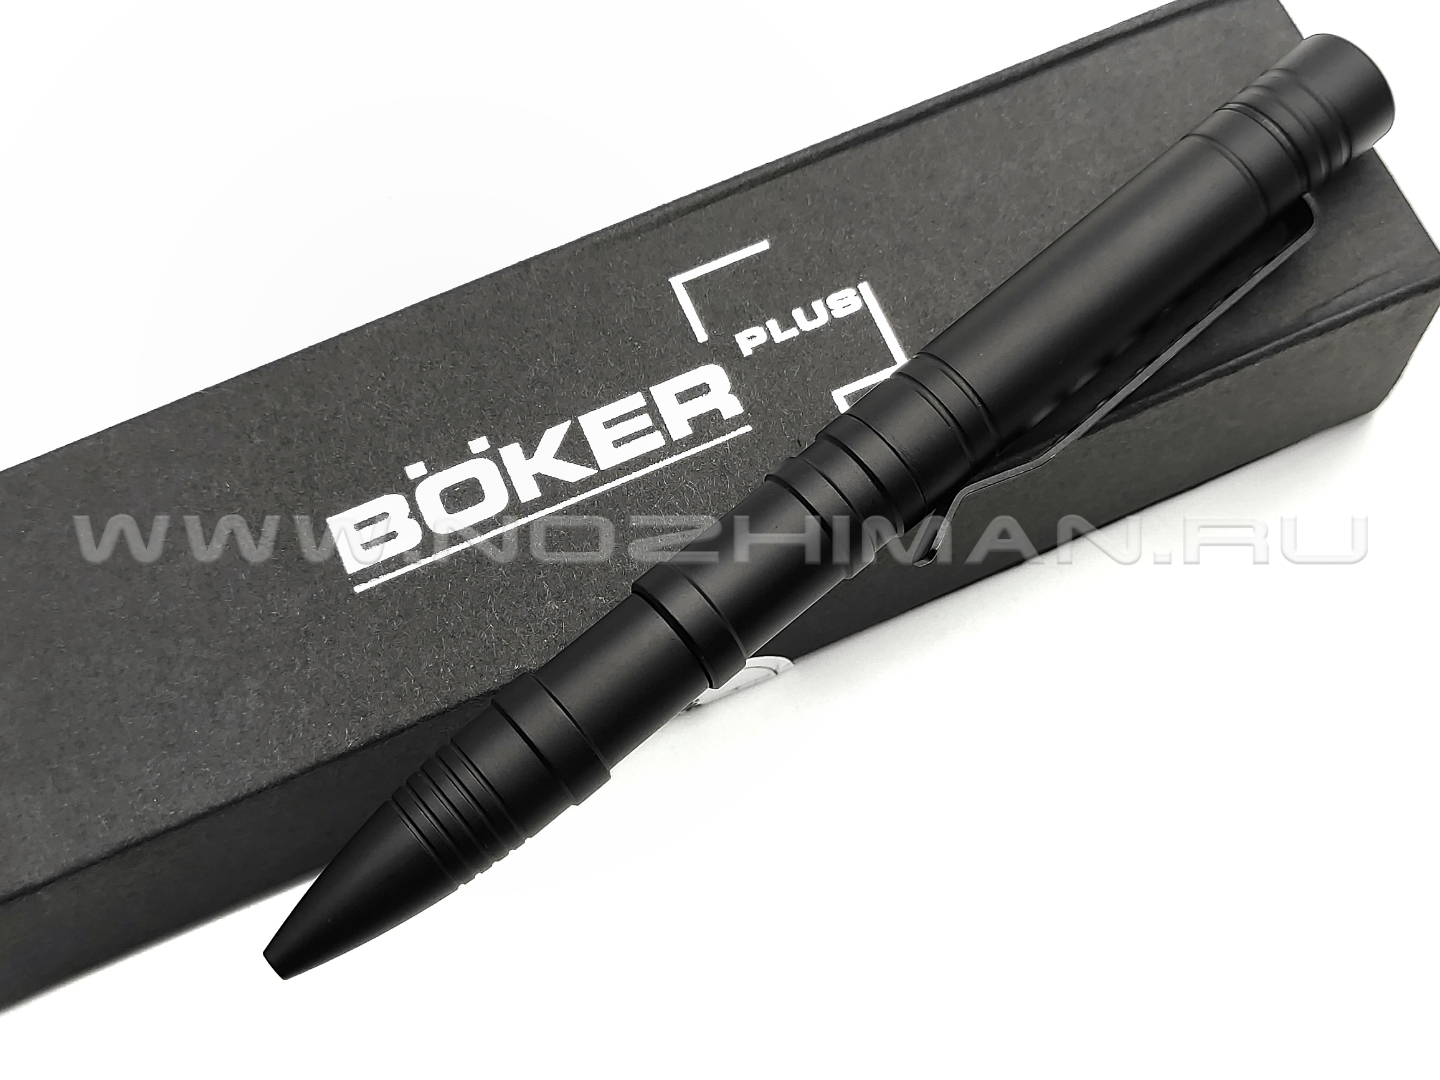 Тактическая ручка Boker Plus Quest Commando Pen 09BO126